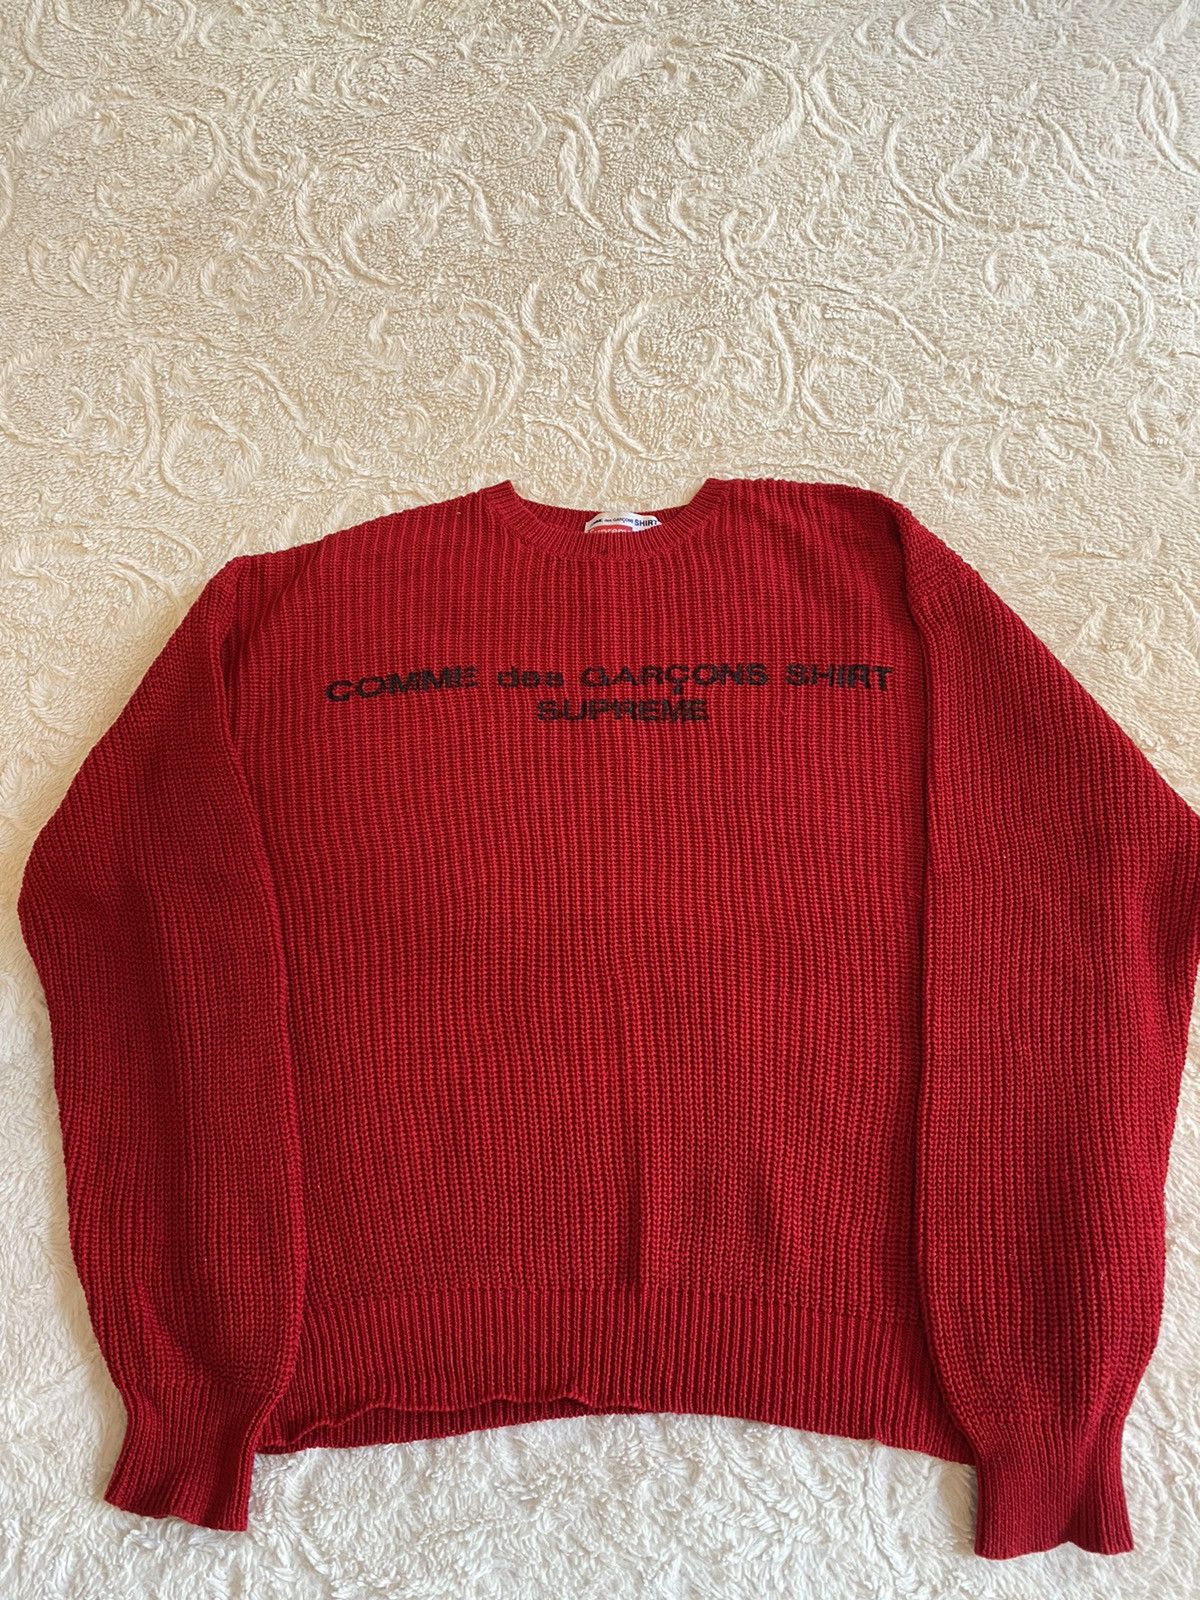 Supreme Supreme x CDG SHIRT Sweater | Grailed